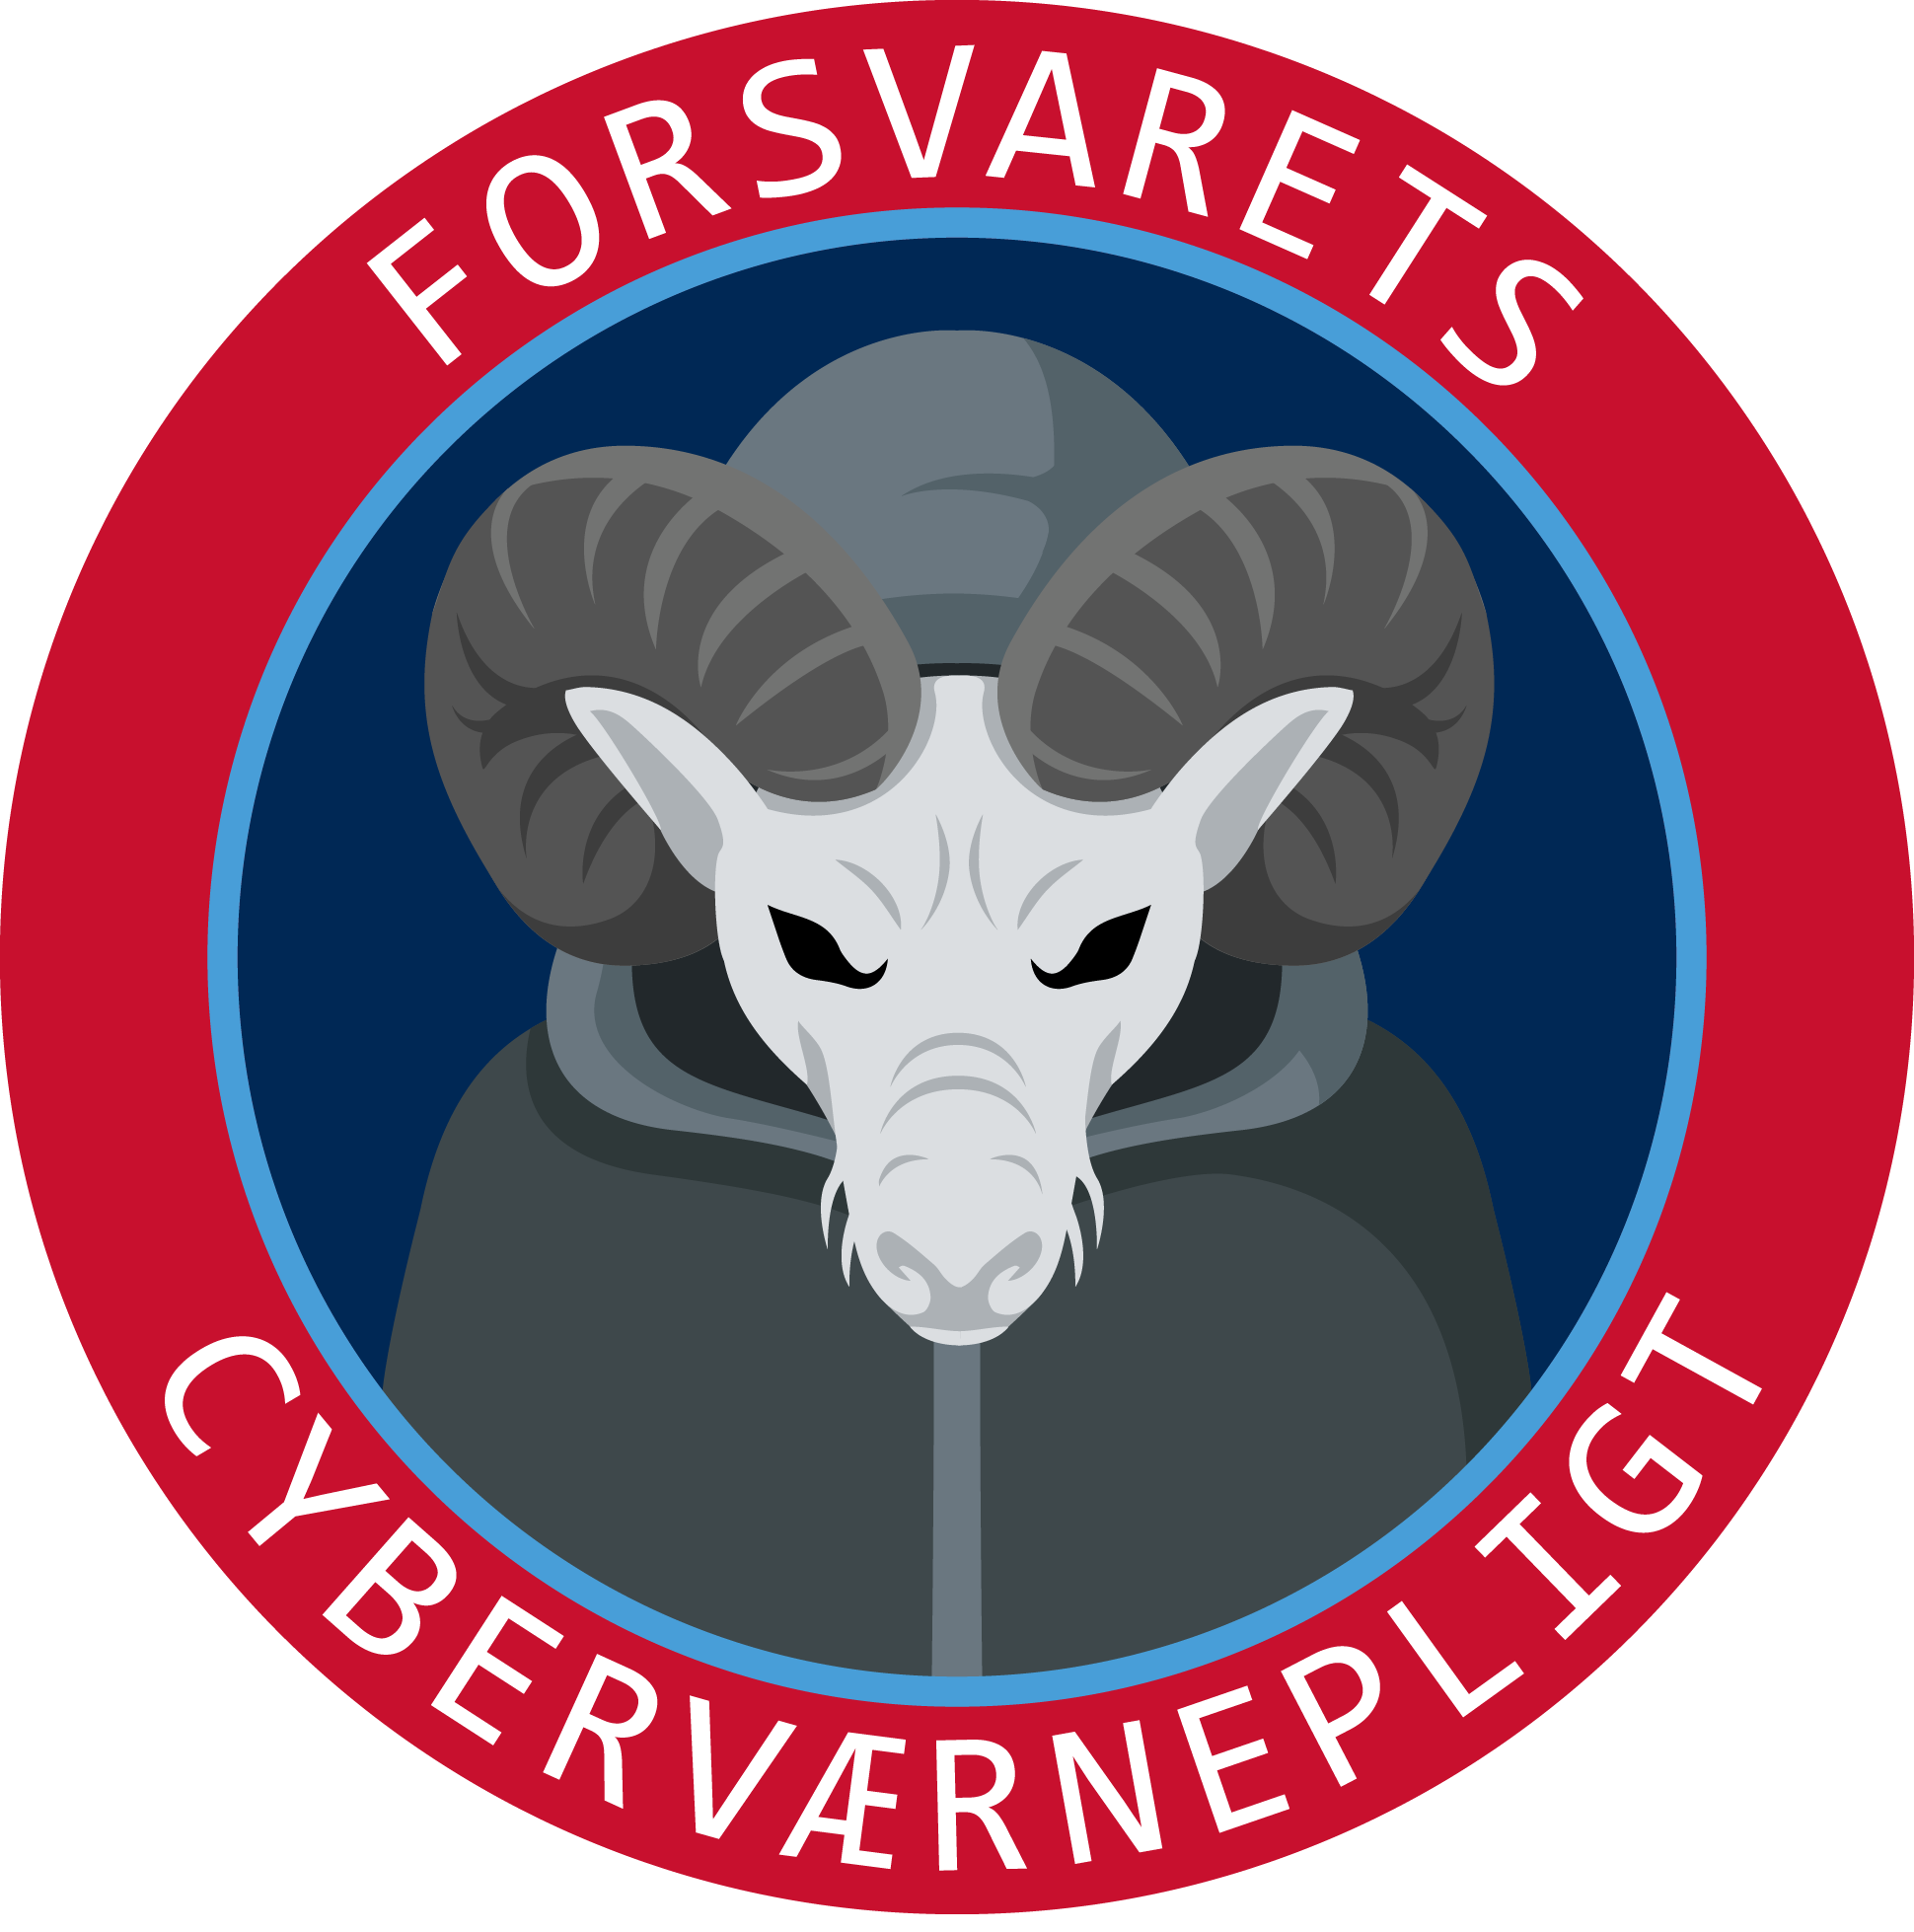 Forsvarets Cyberværnepligt